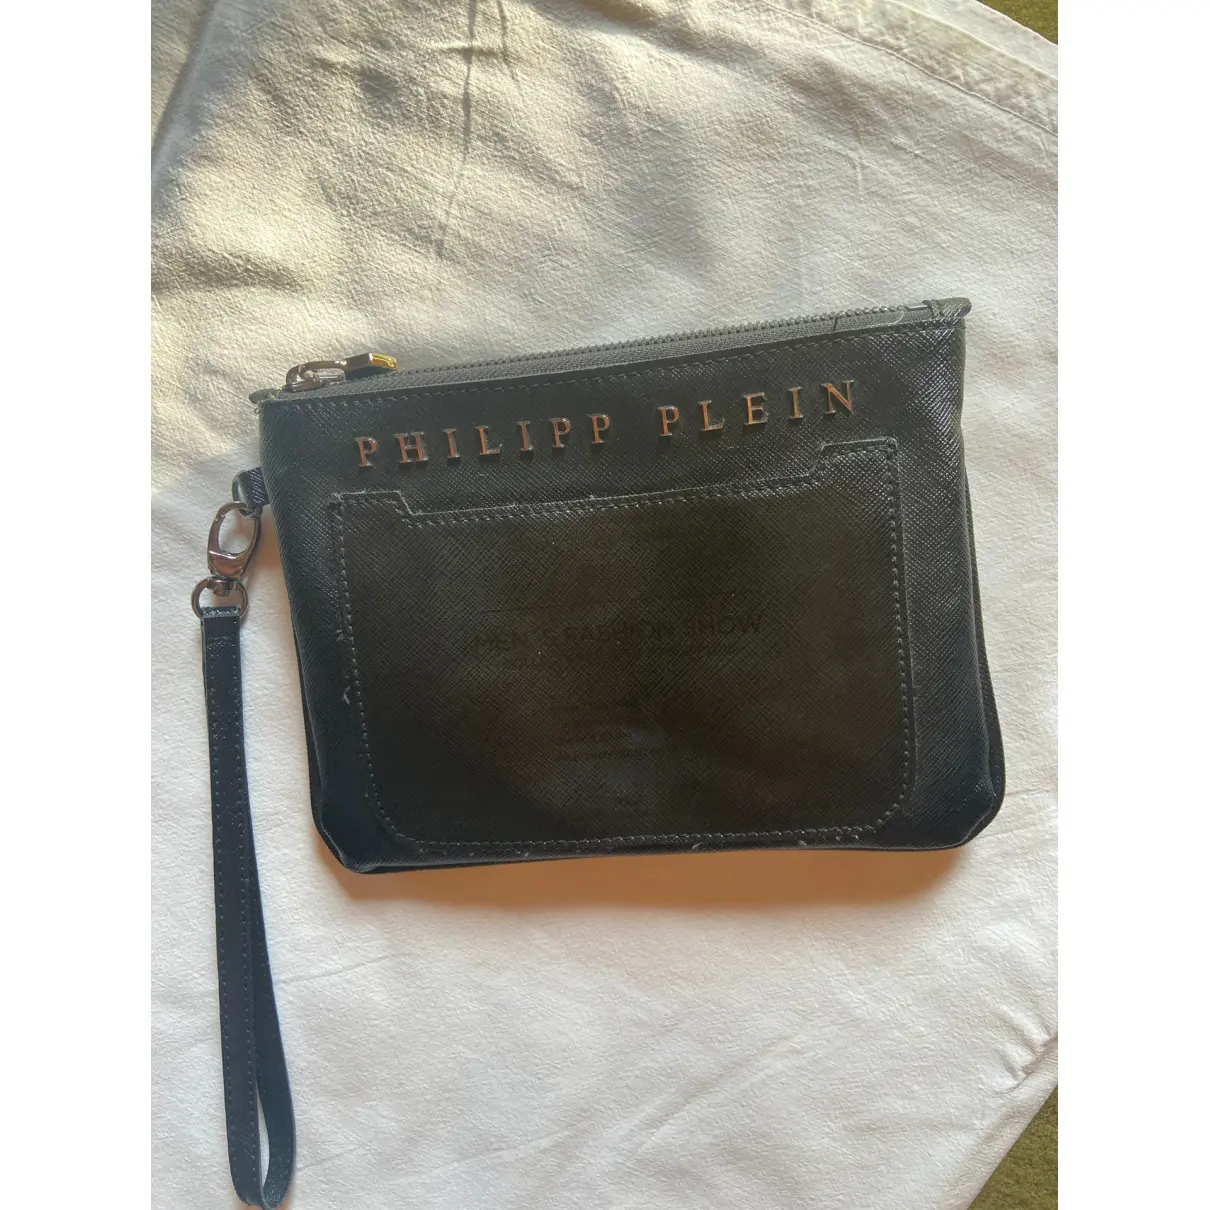 Buy Philipp Plein Clutch bag online